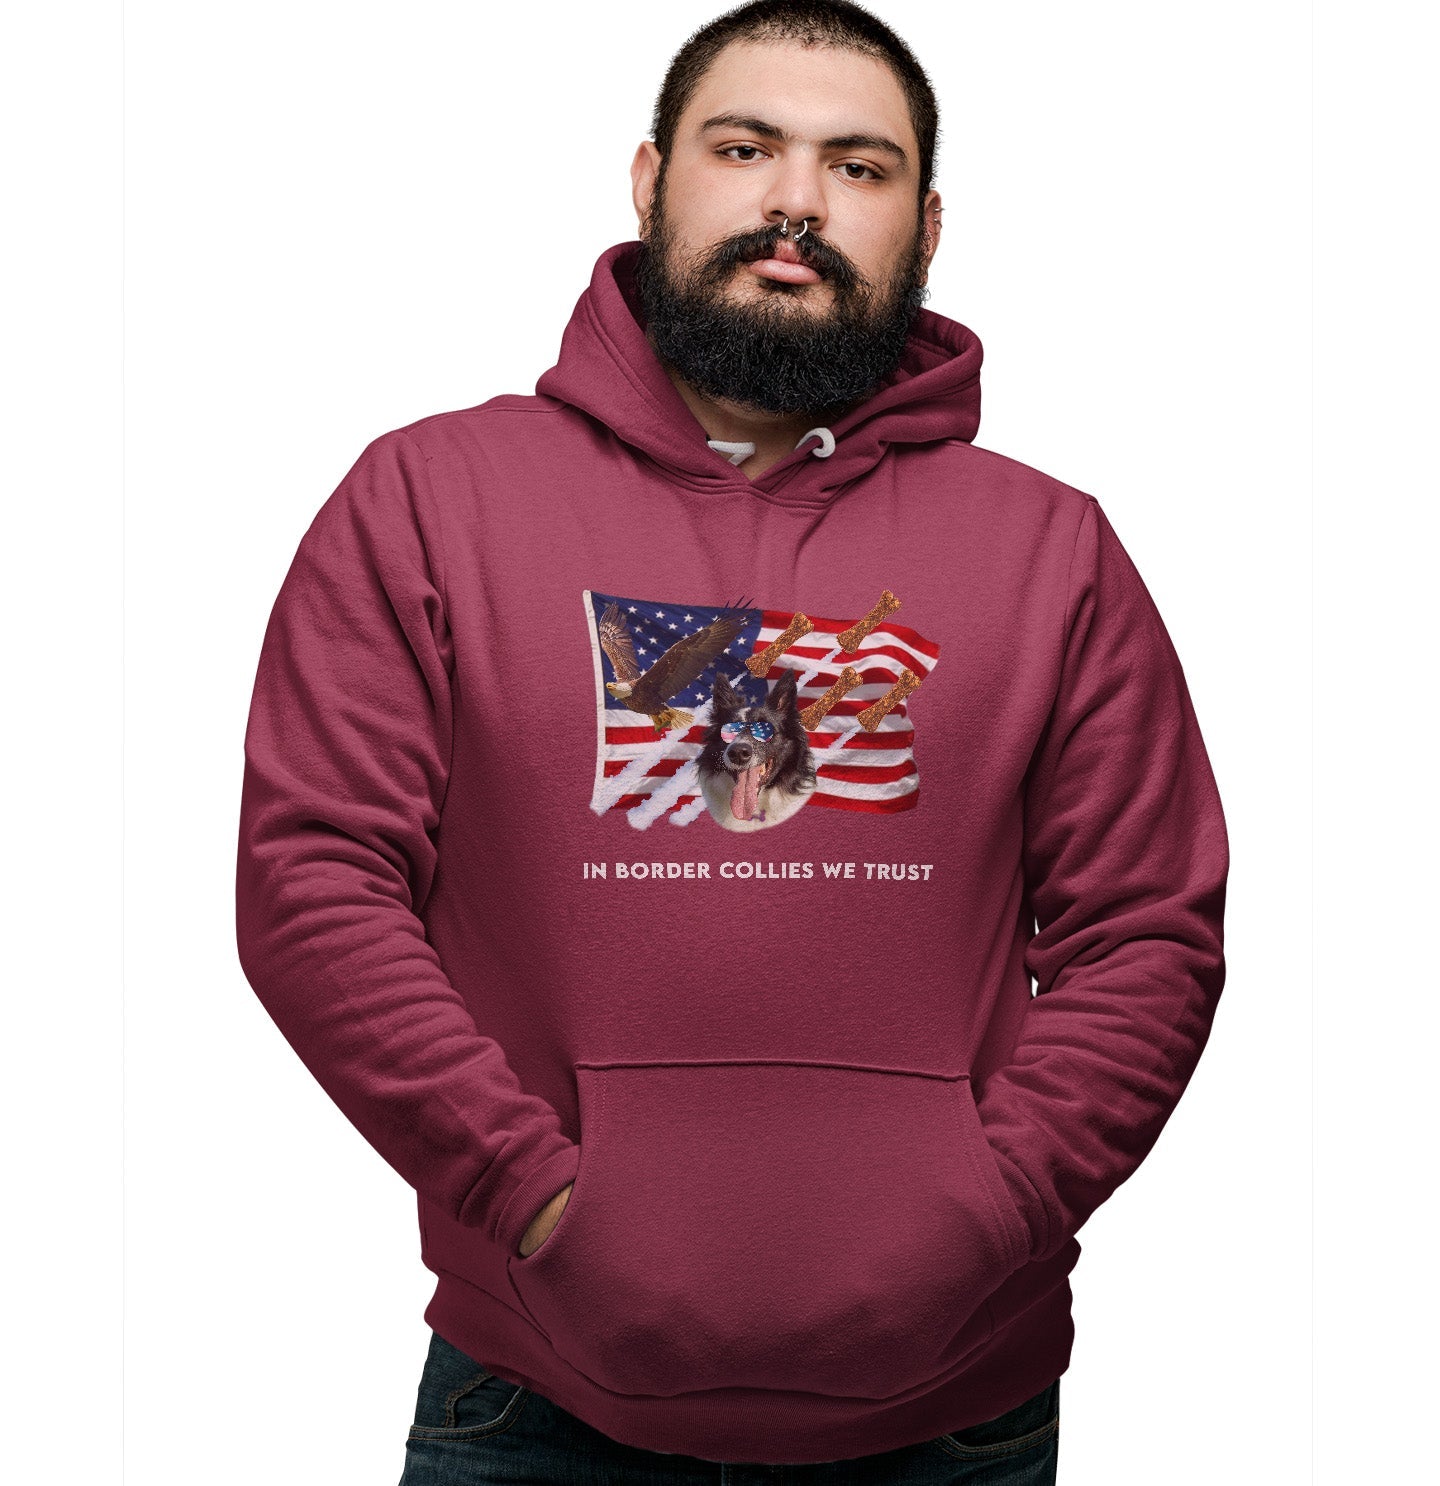 In Border Collies We Trust - Adult Unisex Hoodie Sweatshirt